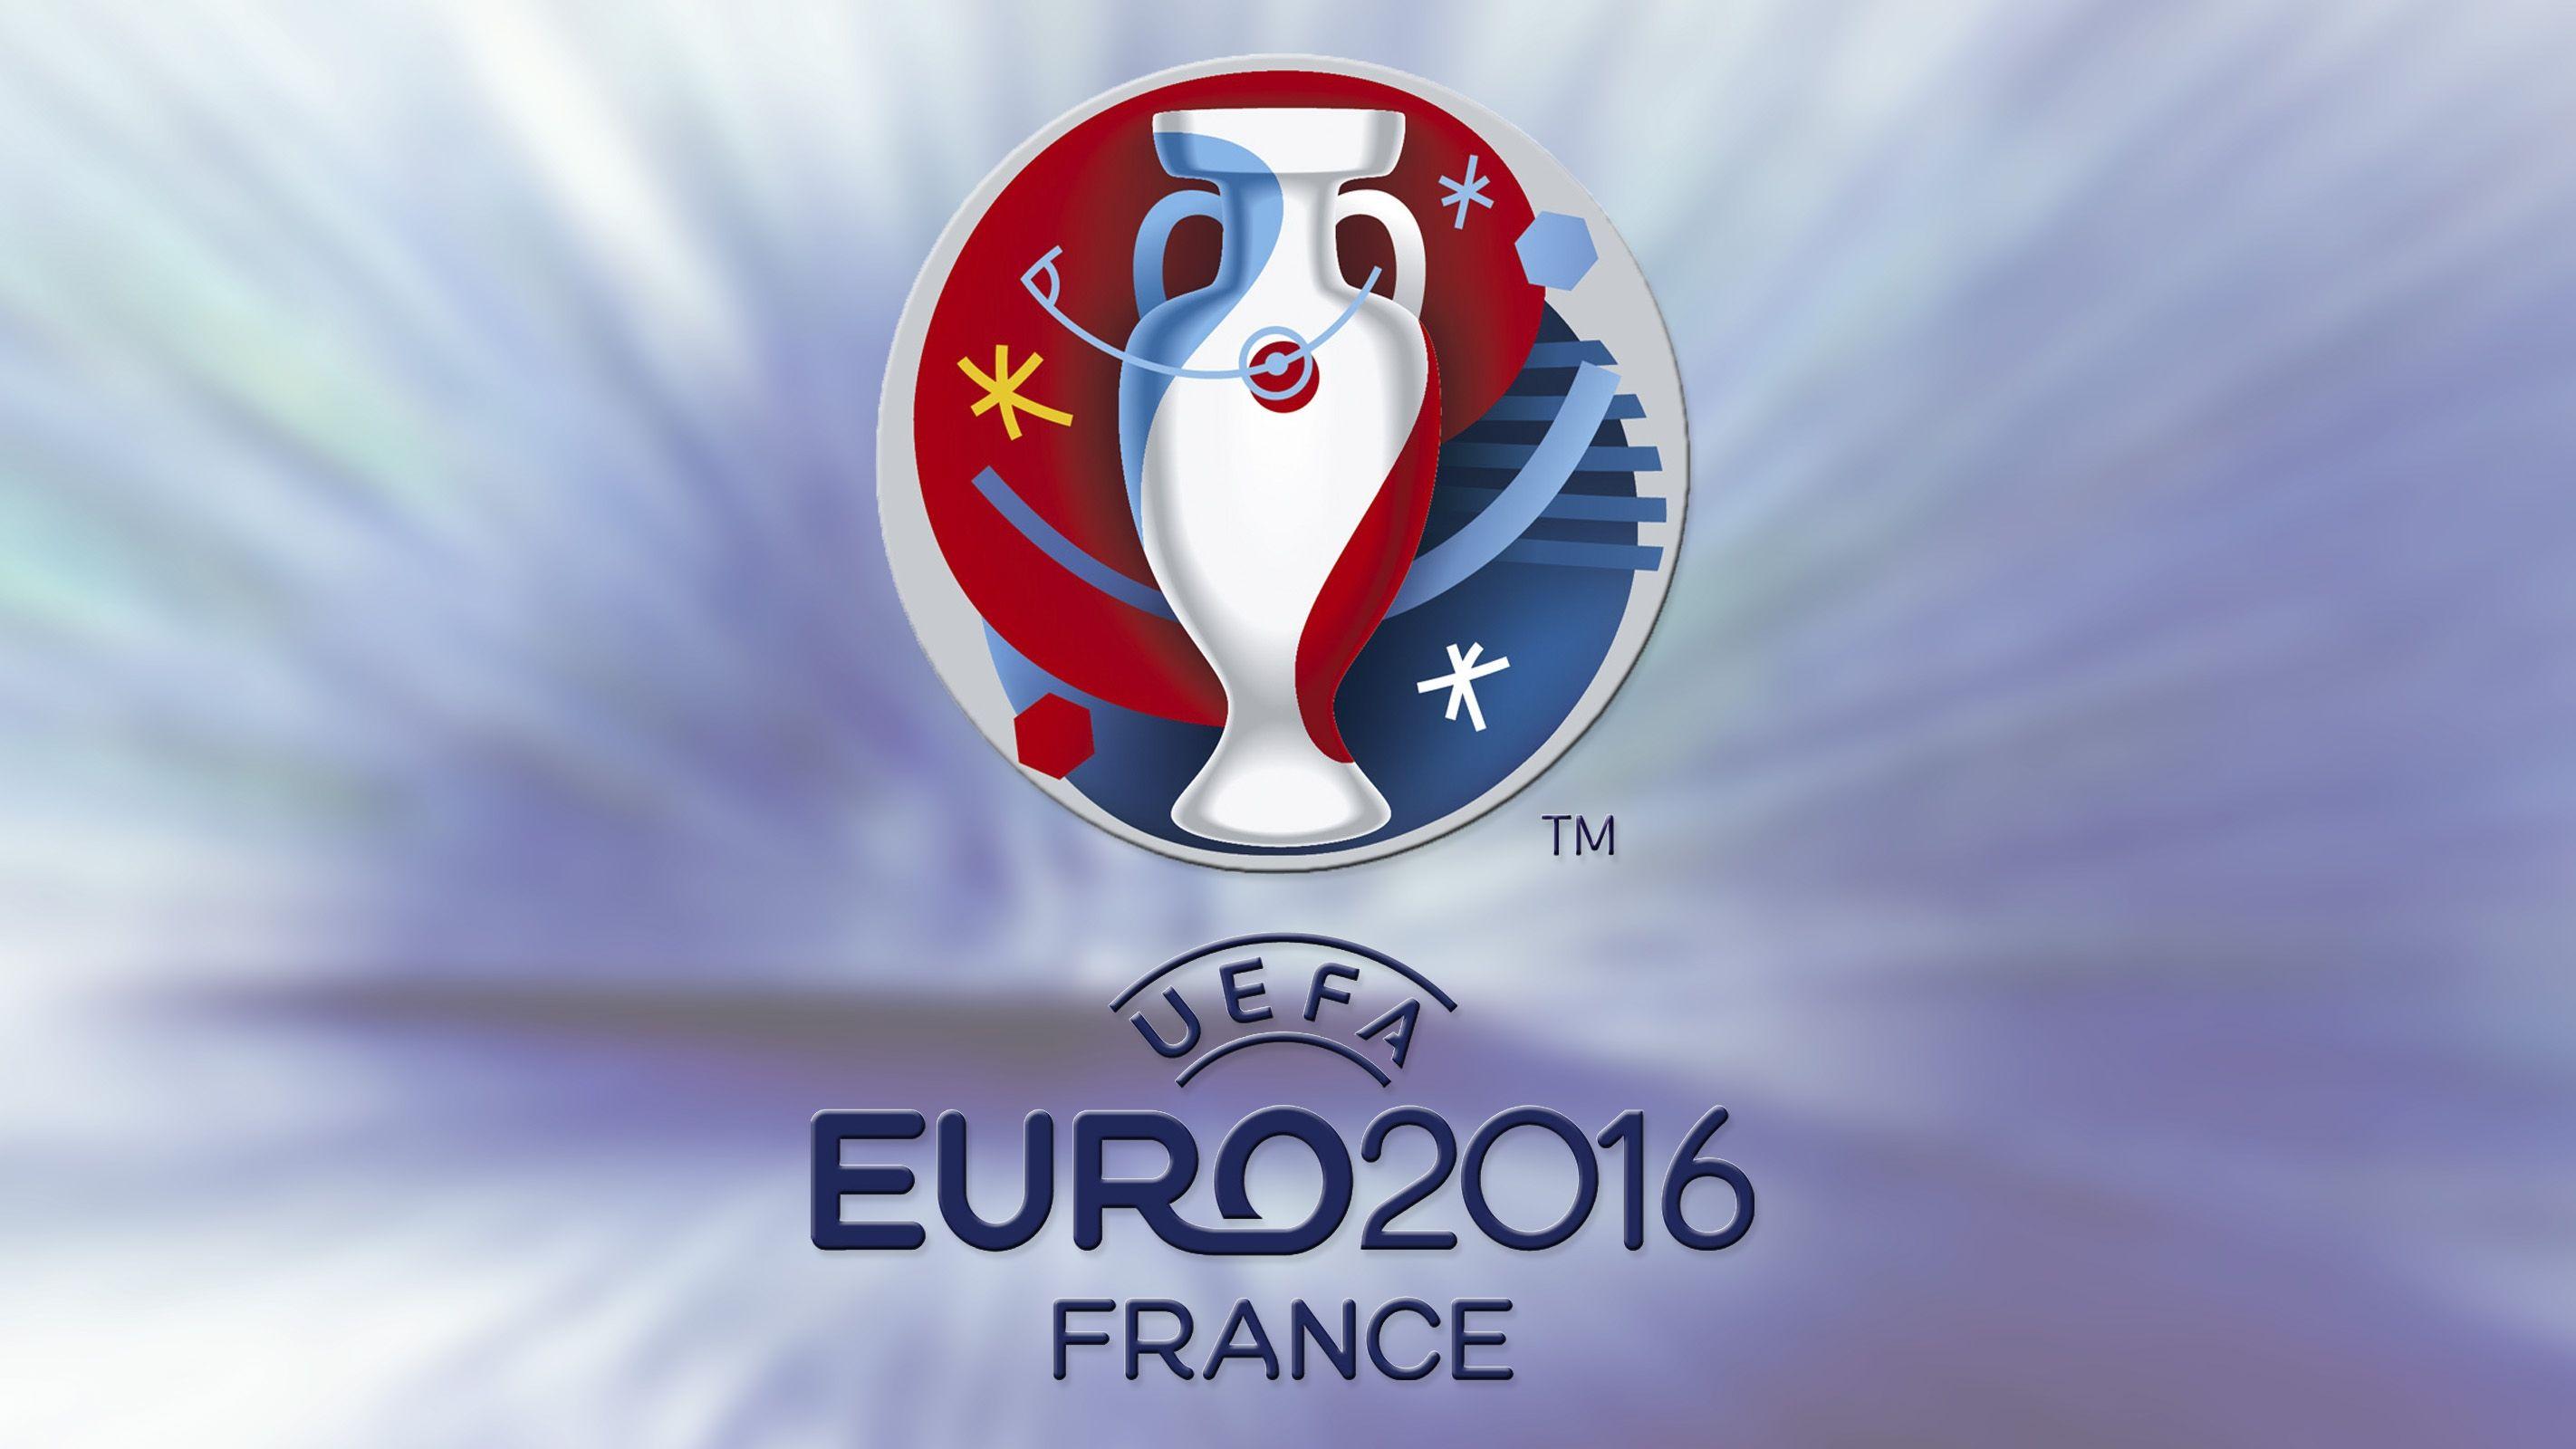 Euro 2016 France Wallpaper: Players, Teams, Leagues Wallpaper